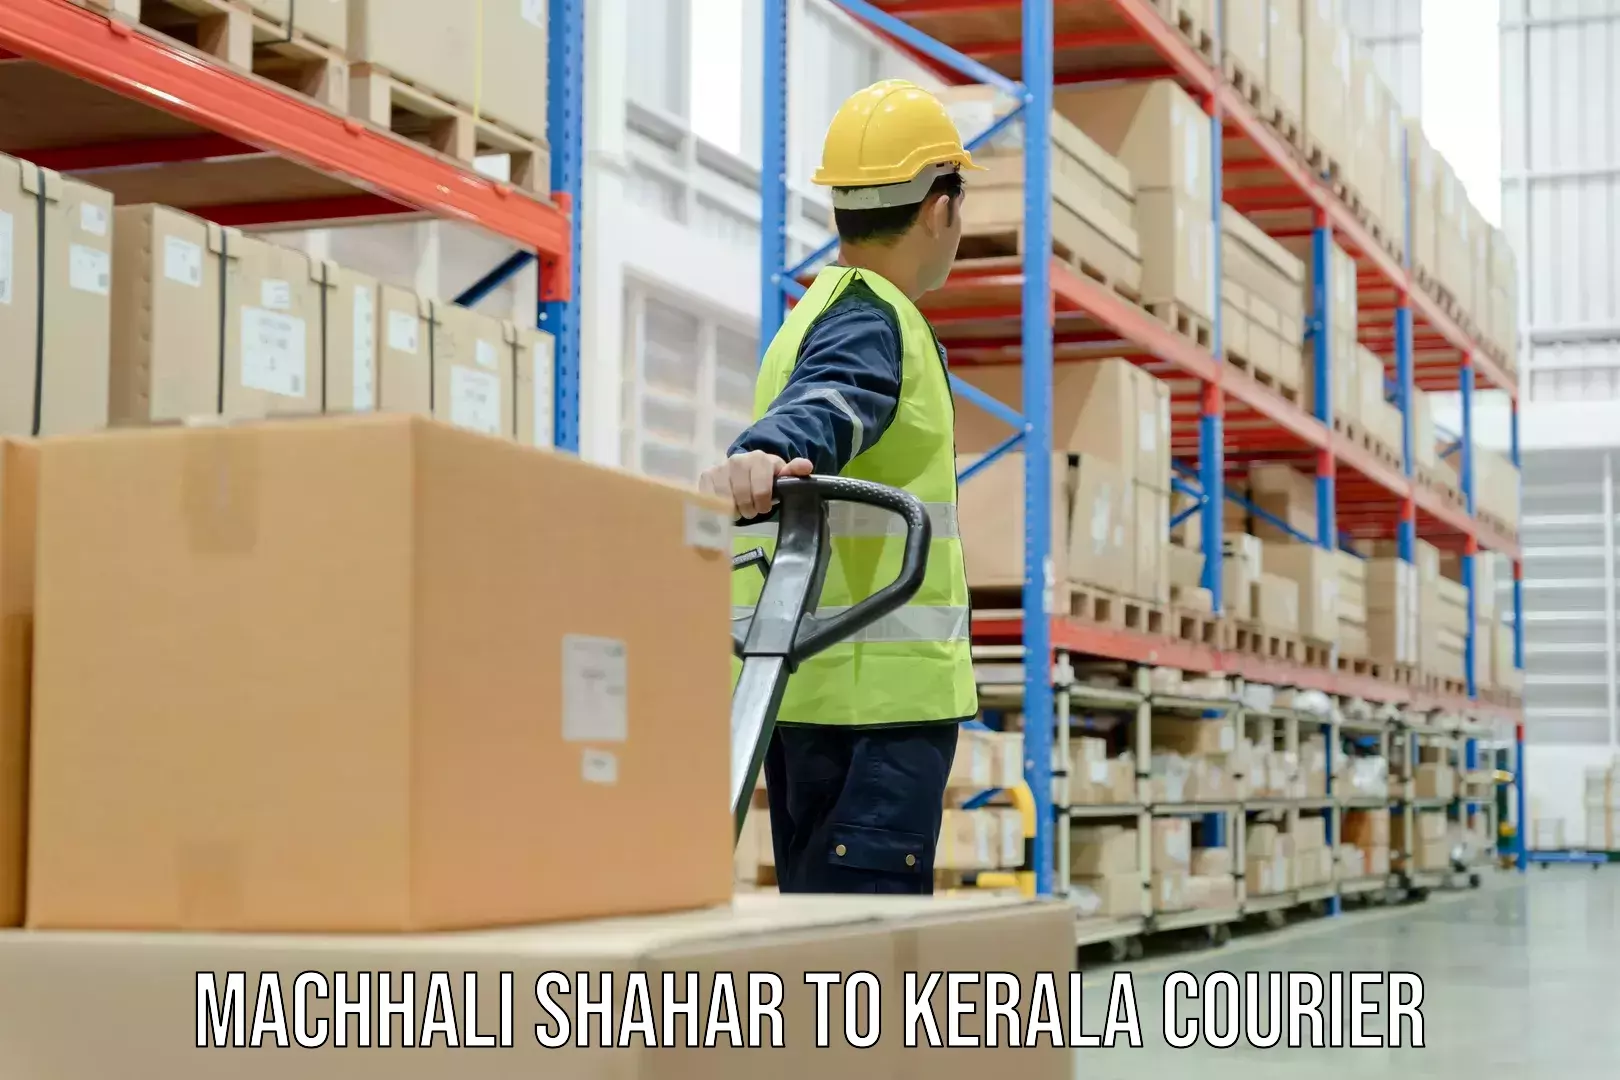 Professional courier handling Machhali Shahar to Ernakulam